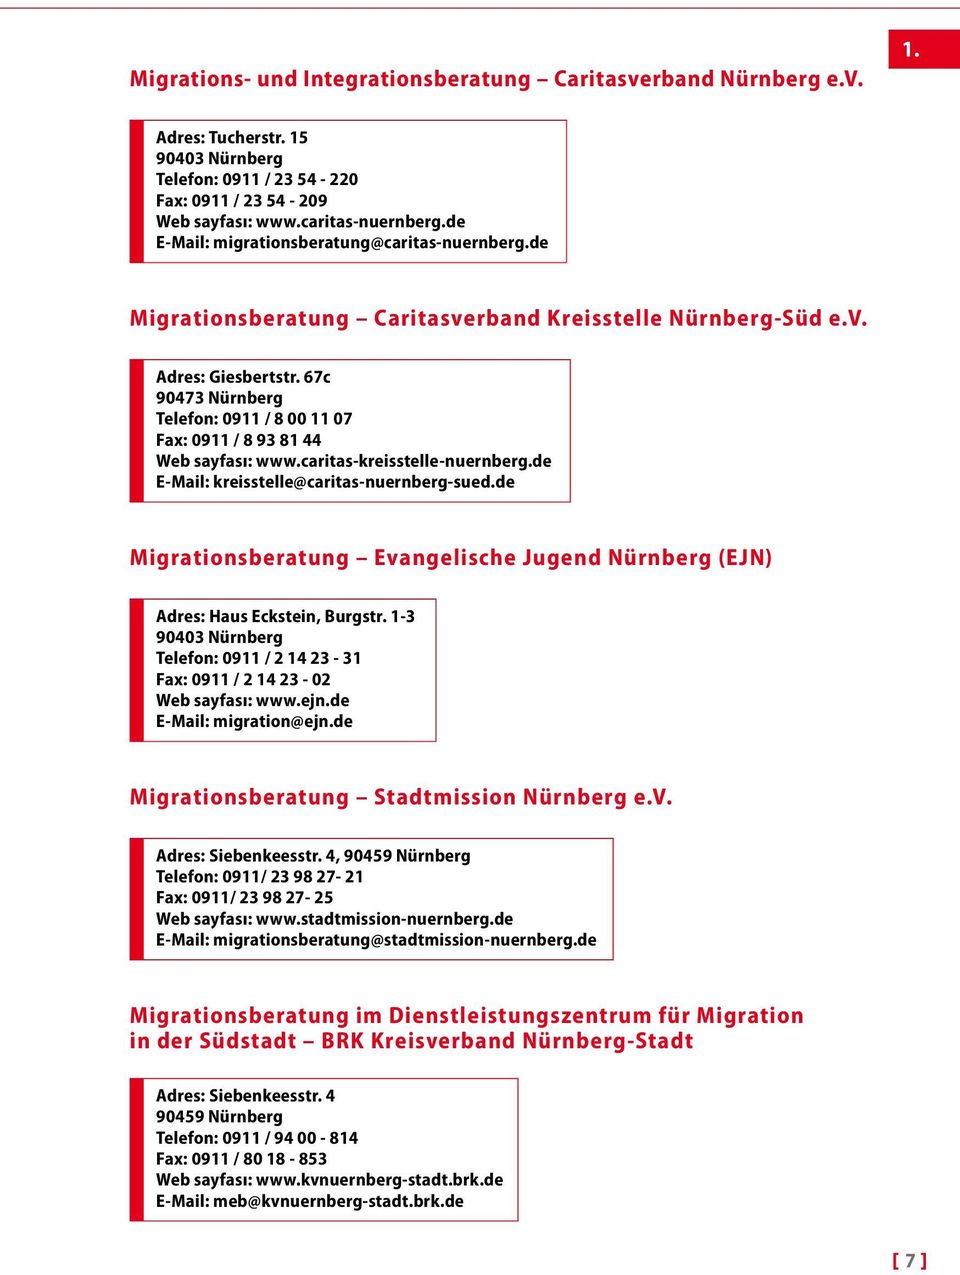 67c 90473 Nürnberg Telefon: 0911 / 8 00 11 07 Fax: 0911 / 8 93 81 44 Web sayfası: www.caritas-kreisstelle-nuernberg.de E-Mail: kreisstelle@caritas-nuernberg-sued.